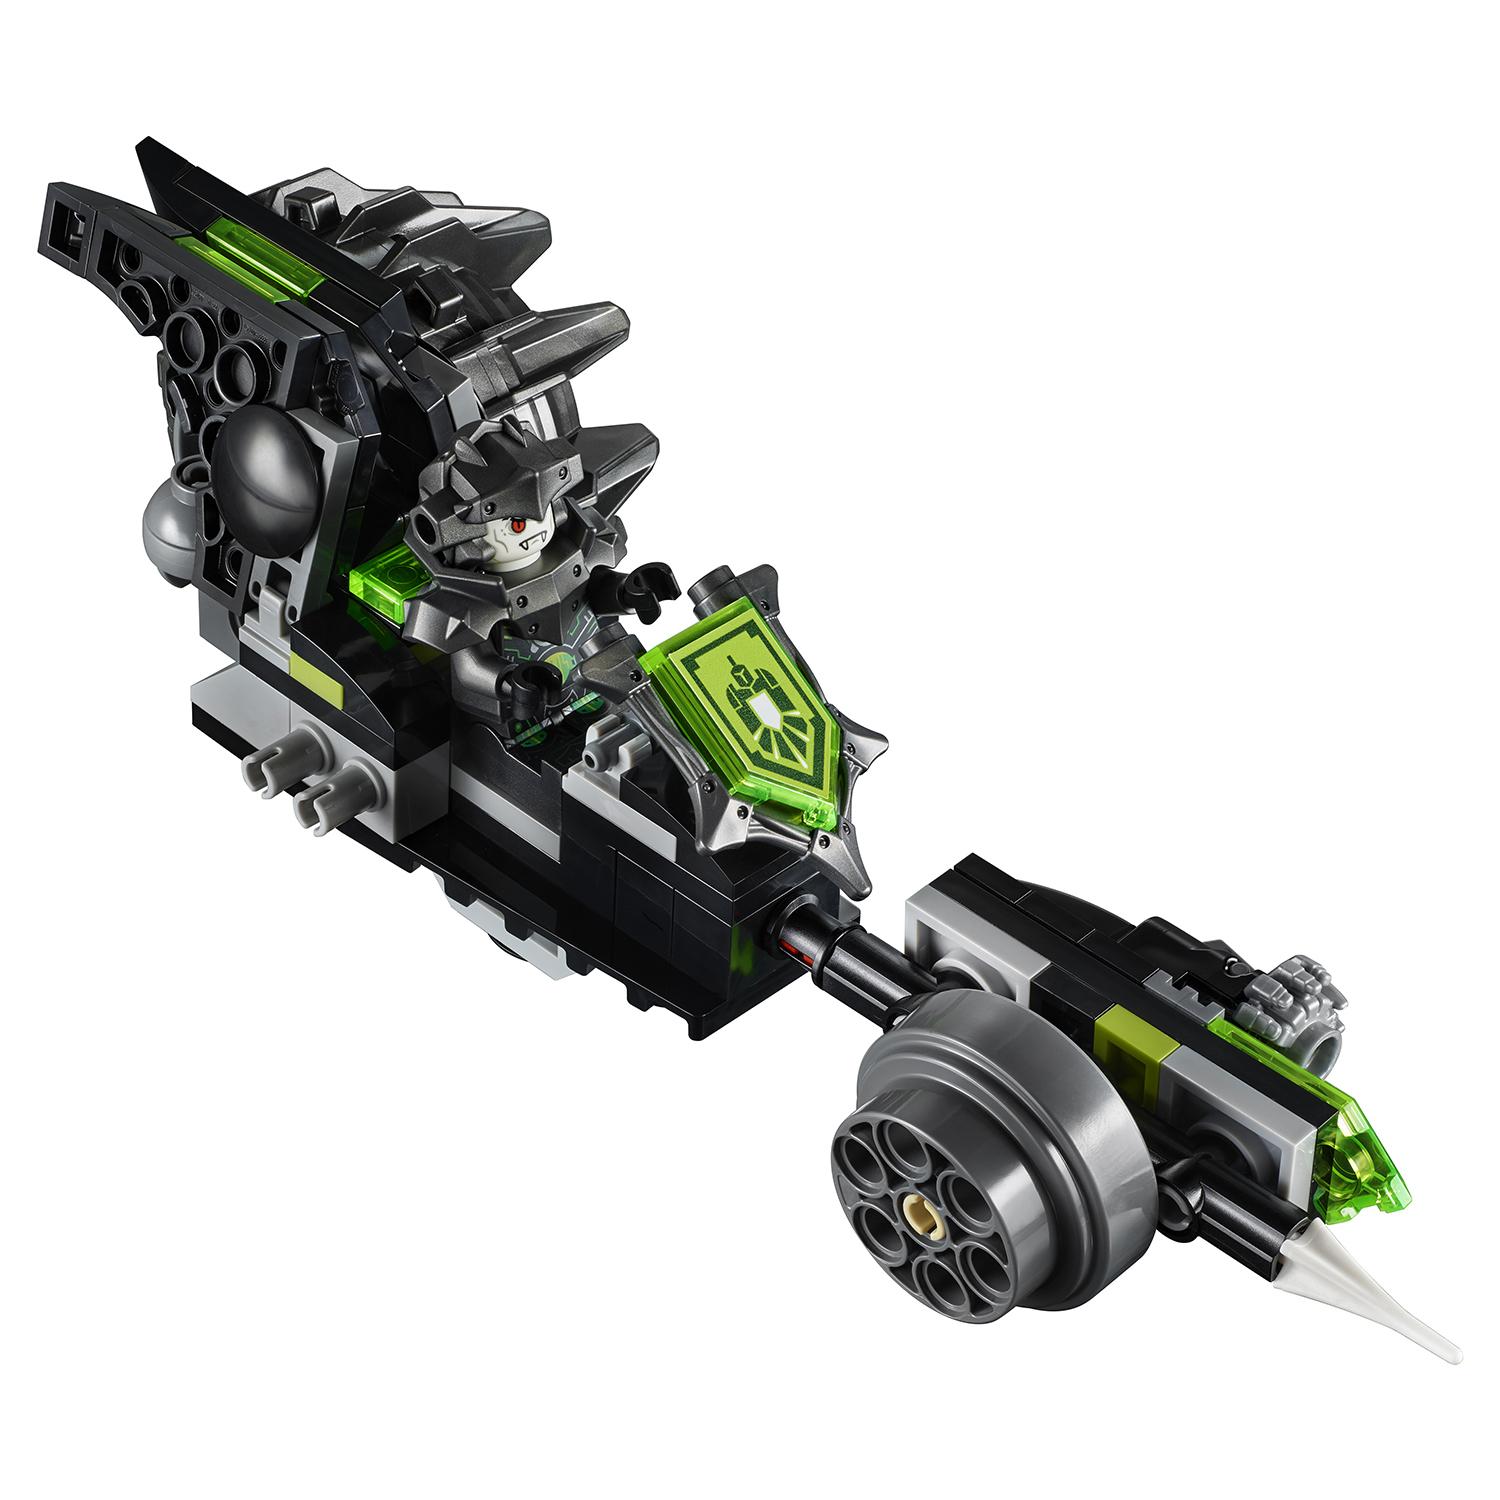 Lego Nexo Knights 72002 Боевая машина близнецов